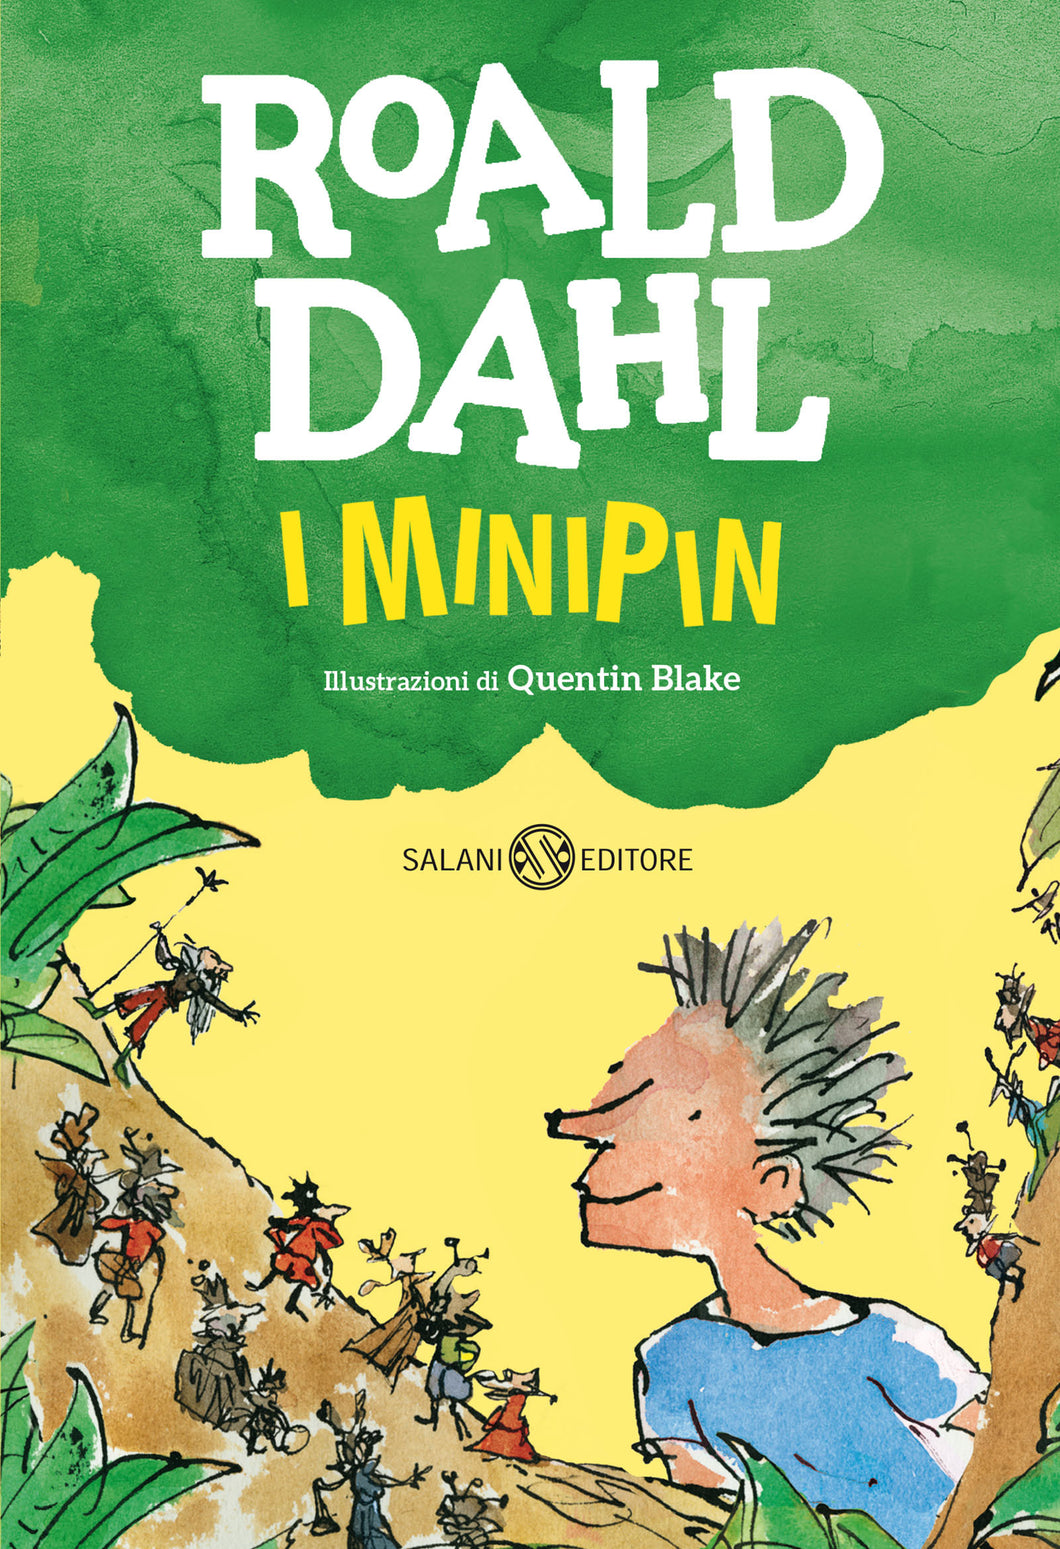 I Minipin - Roald Dahl